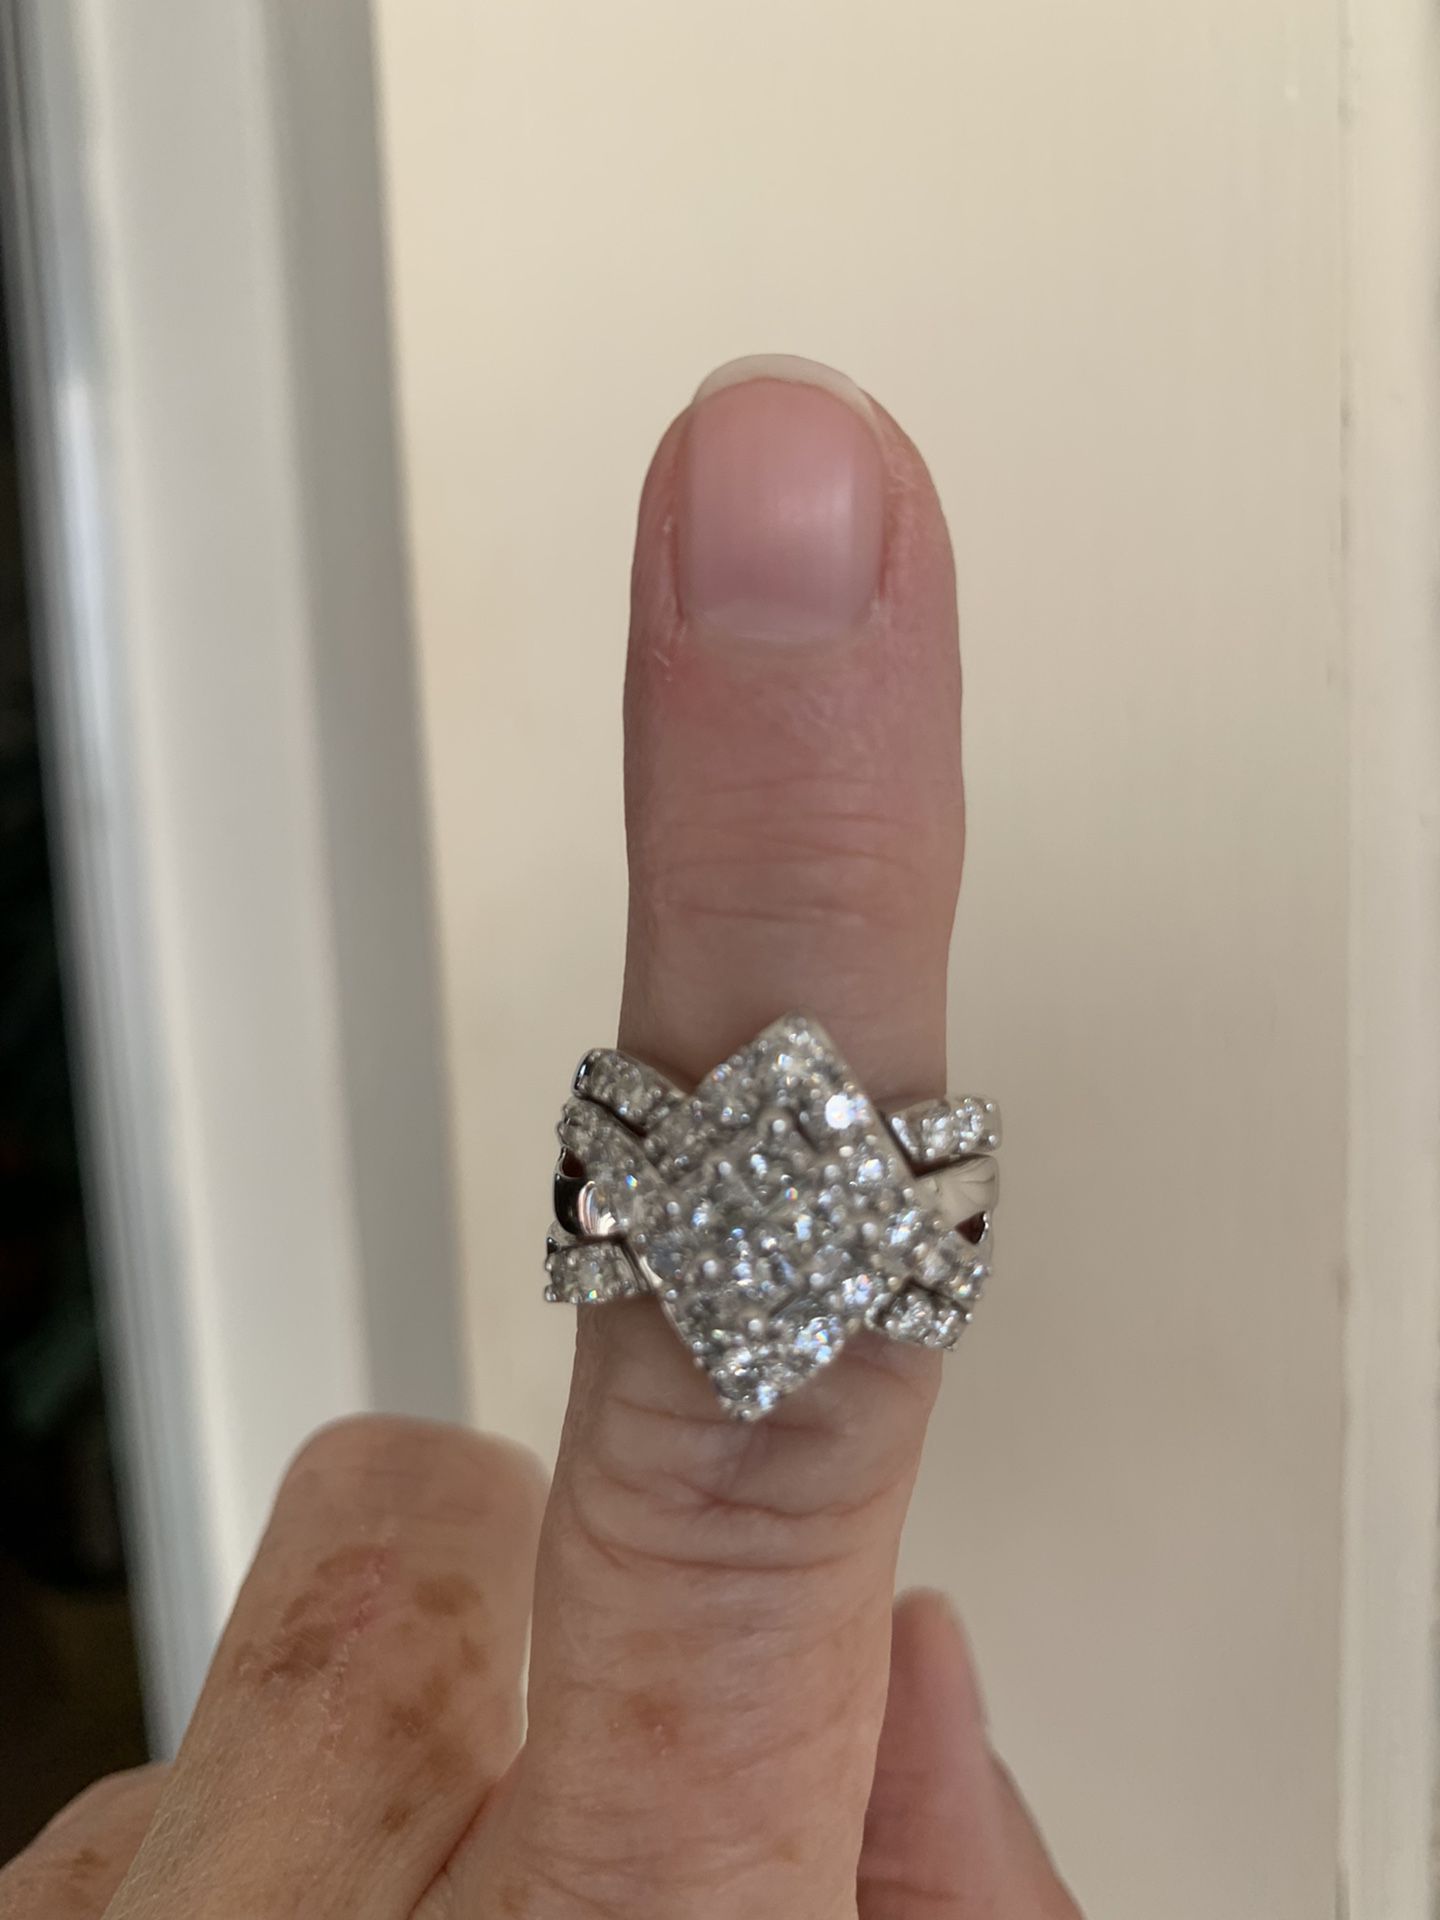 Stunning diamond ring